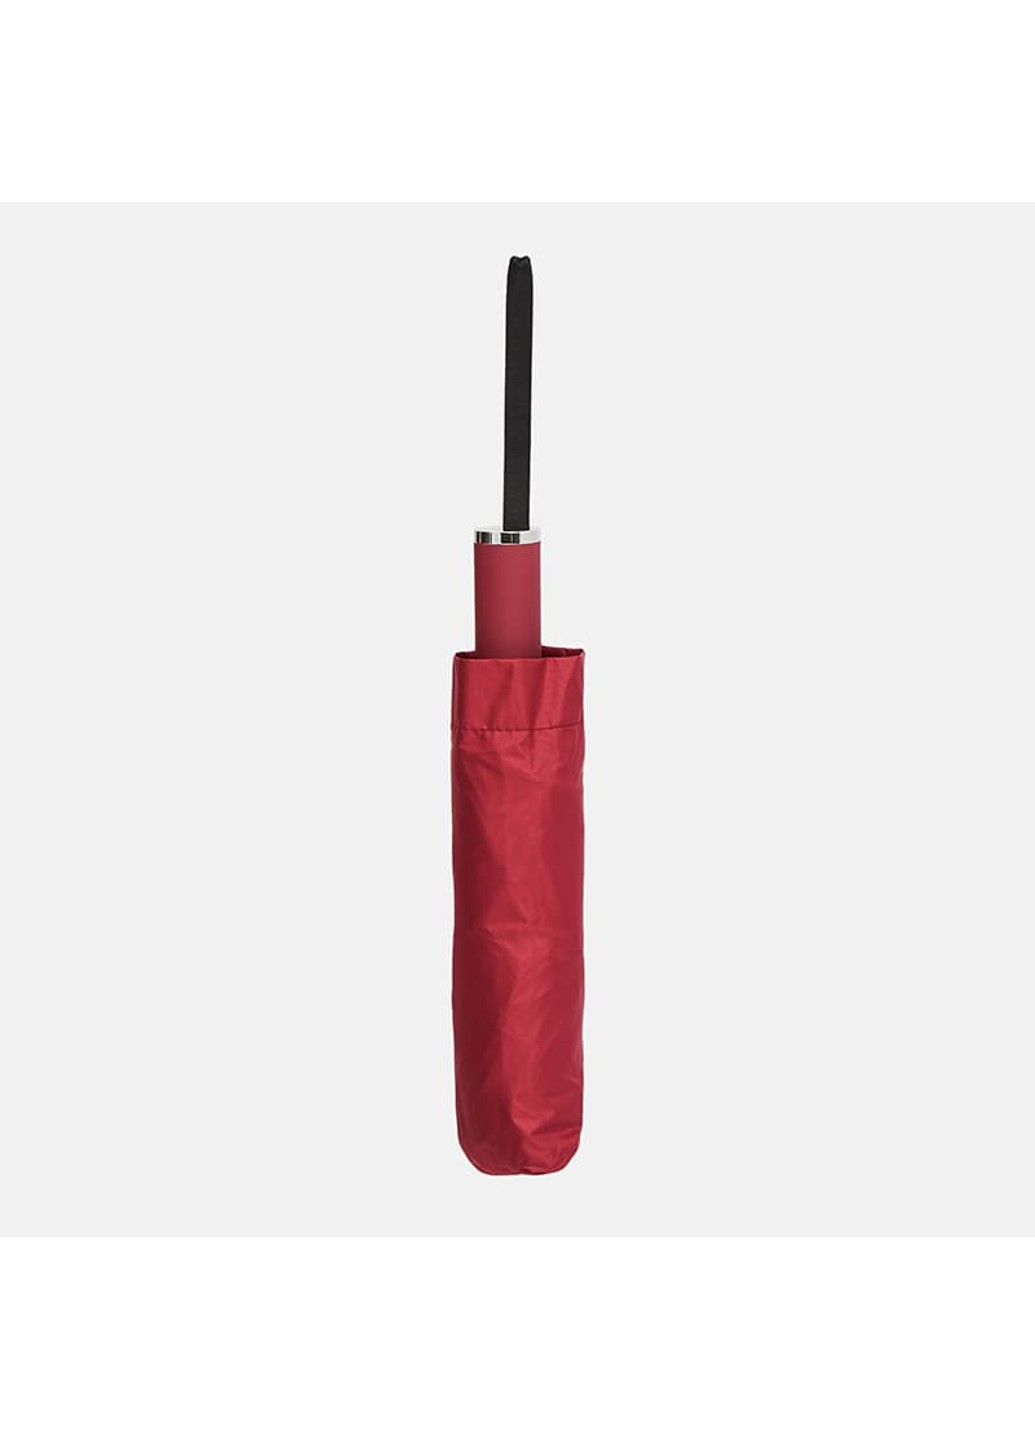 Автоматический зонт C112r-red Monsen (266143072)